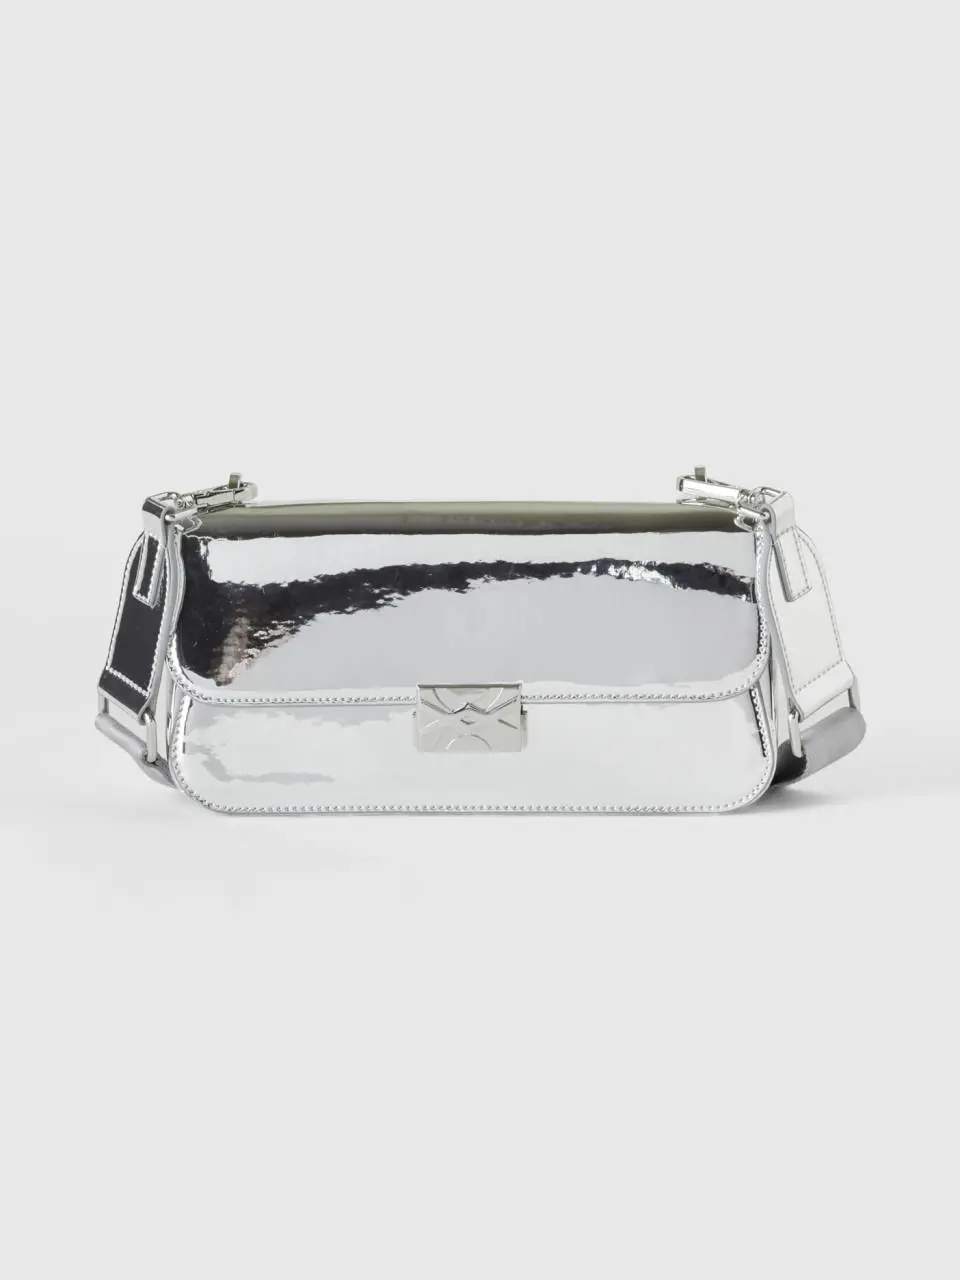 Benetton glossy silver handbag. 1